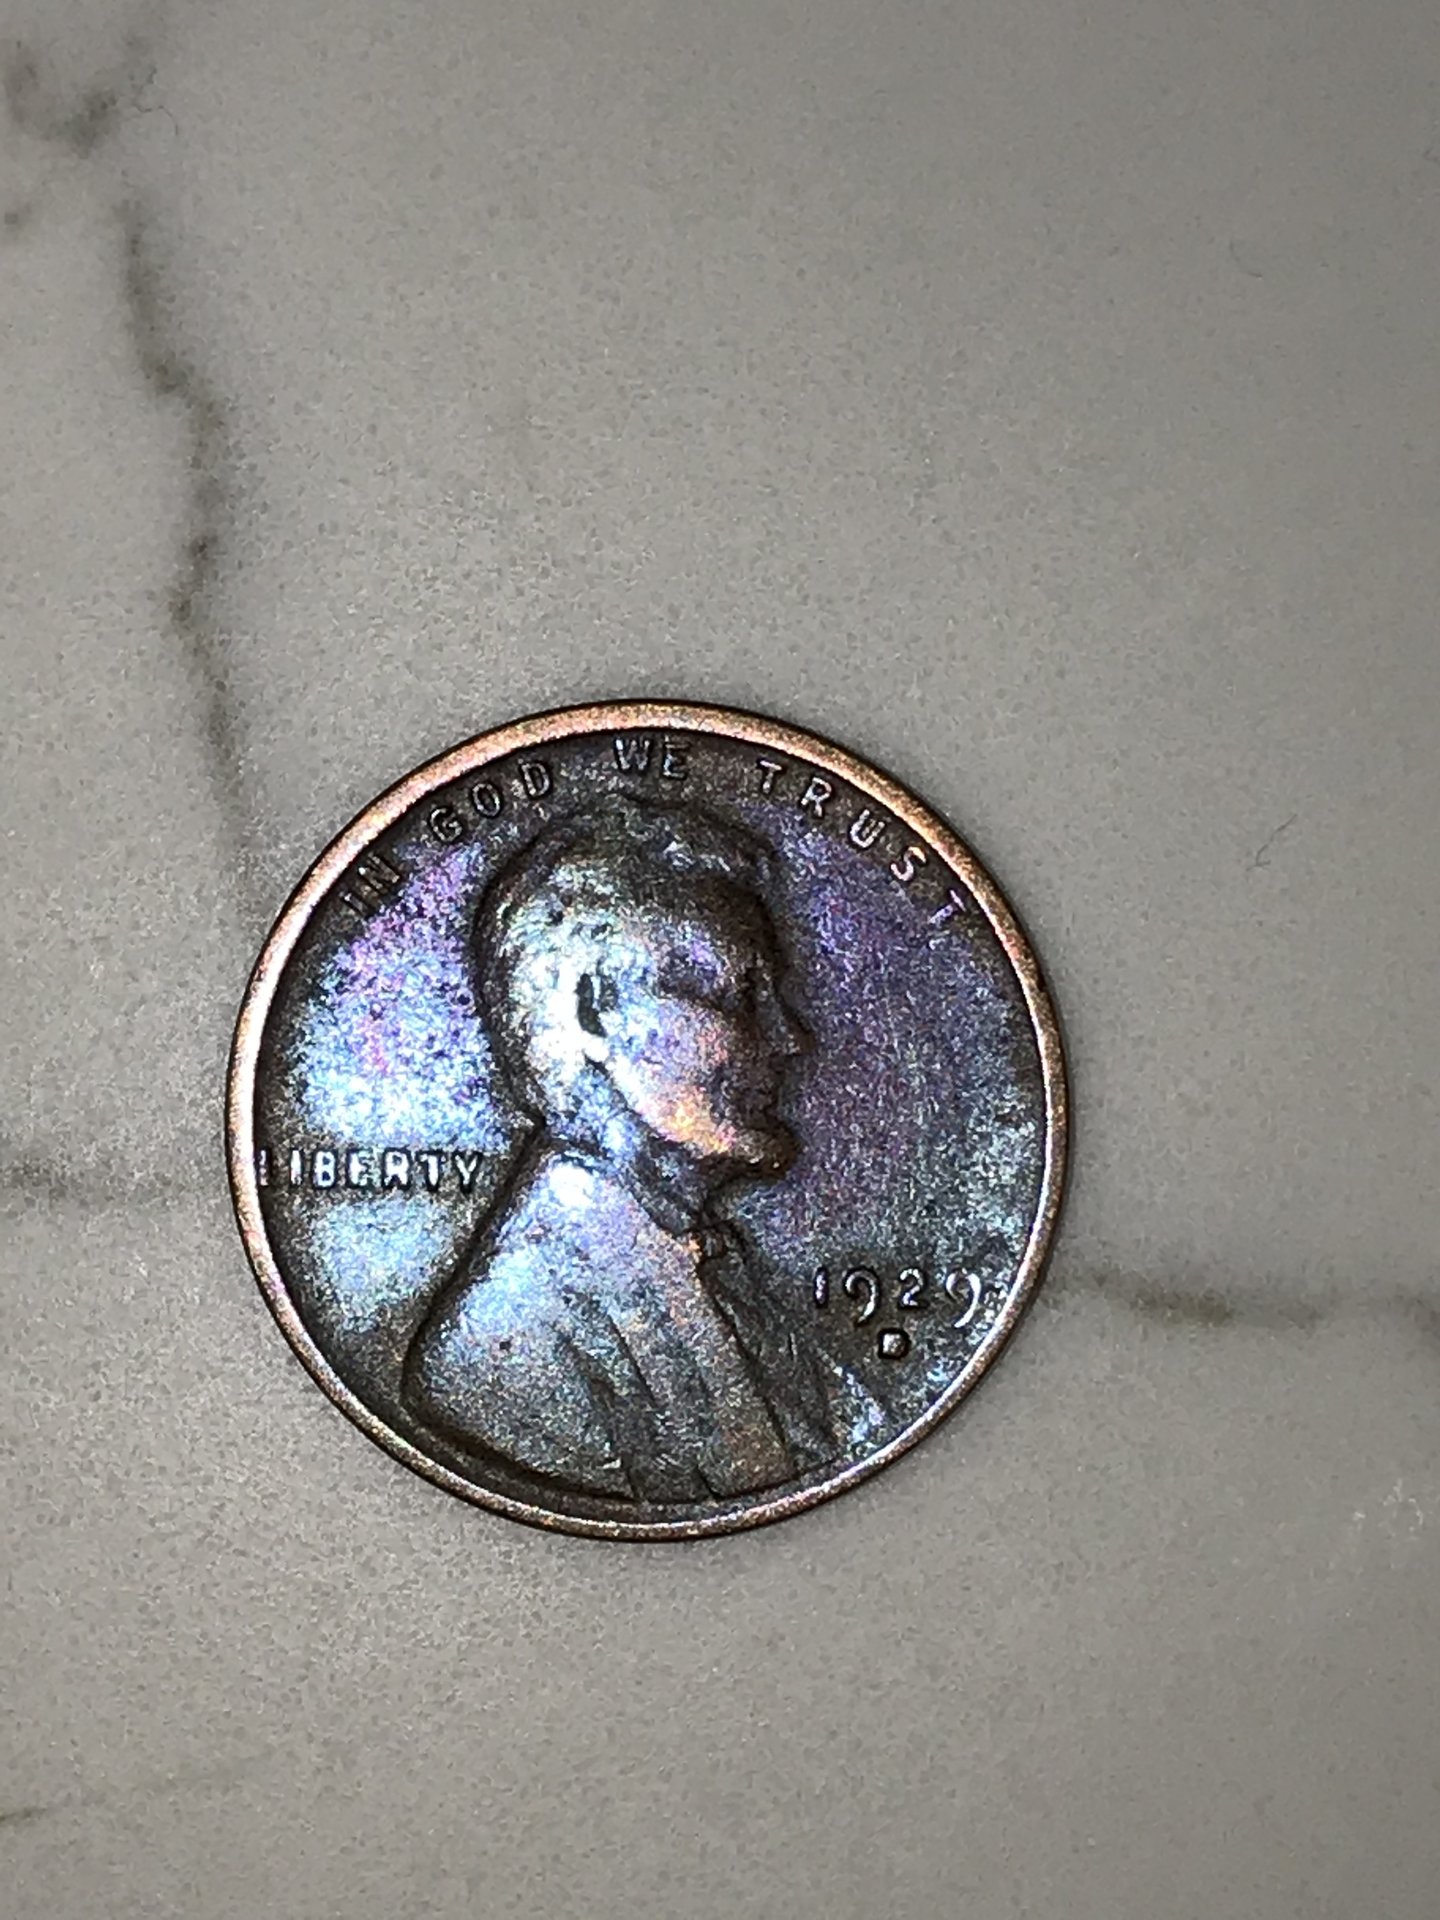 rainbow penny.jpg